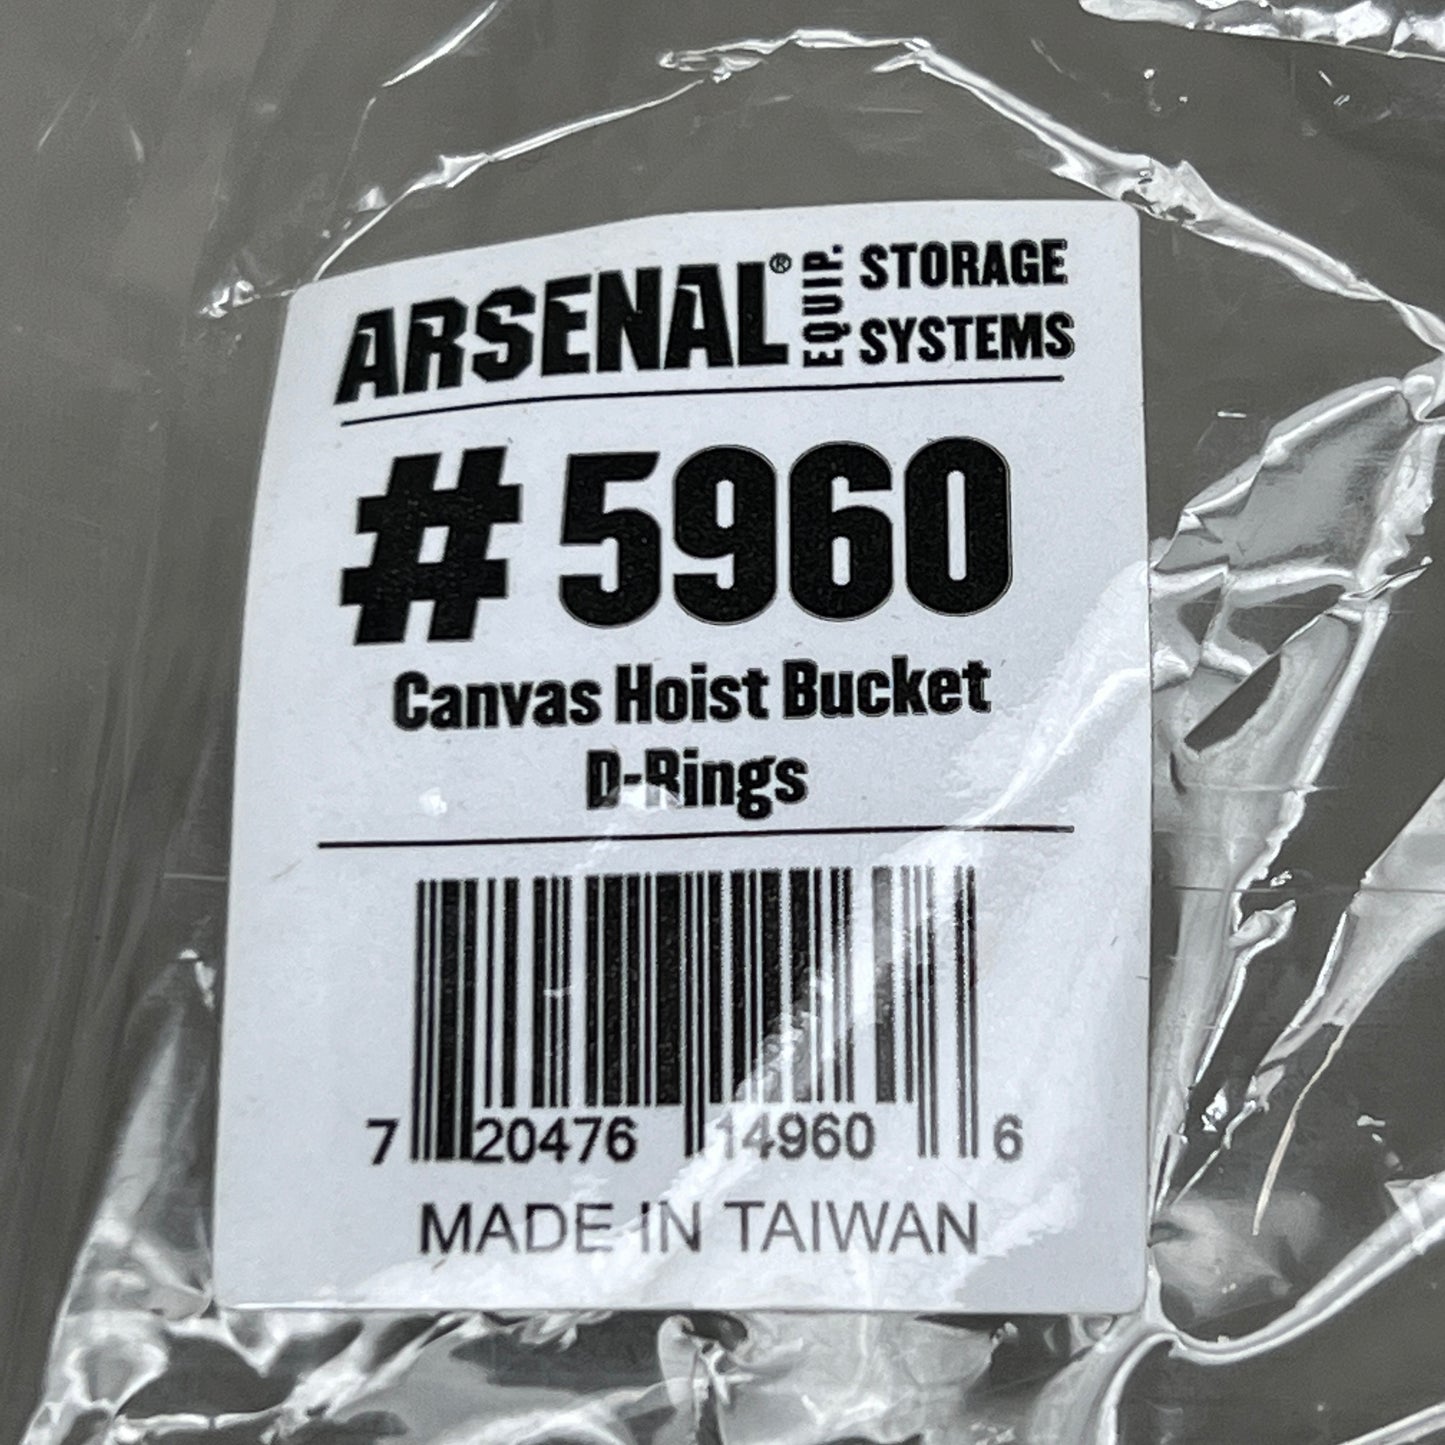 ERGODYNE Arsenal Work Gear Canvas Hoist Bucket W/ D-Rings 5960 (New)